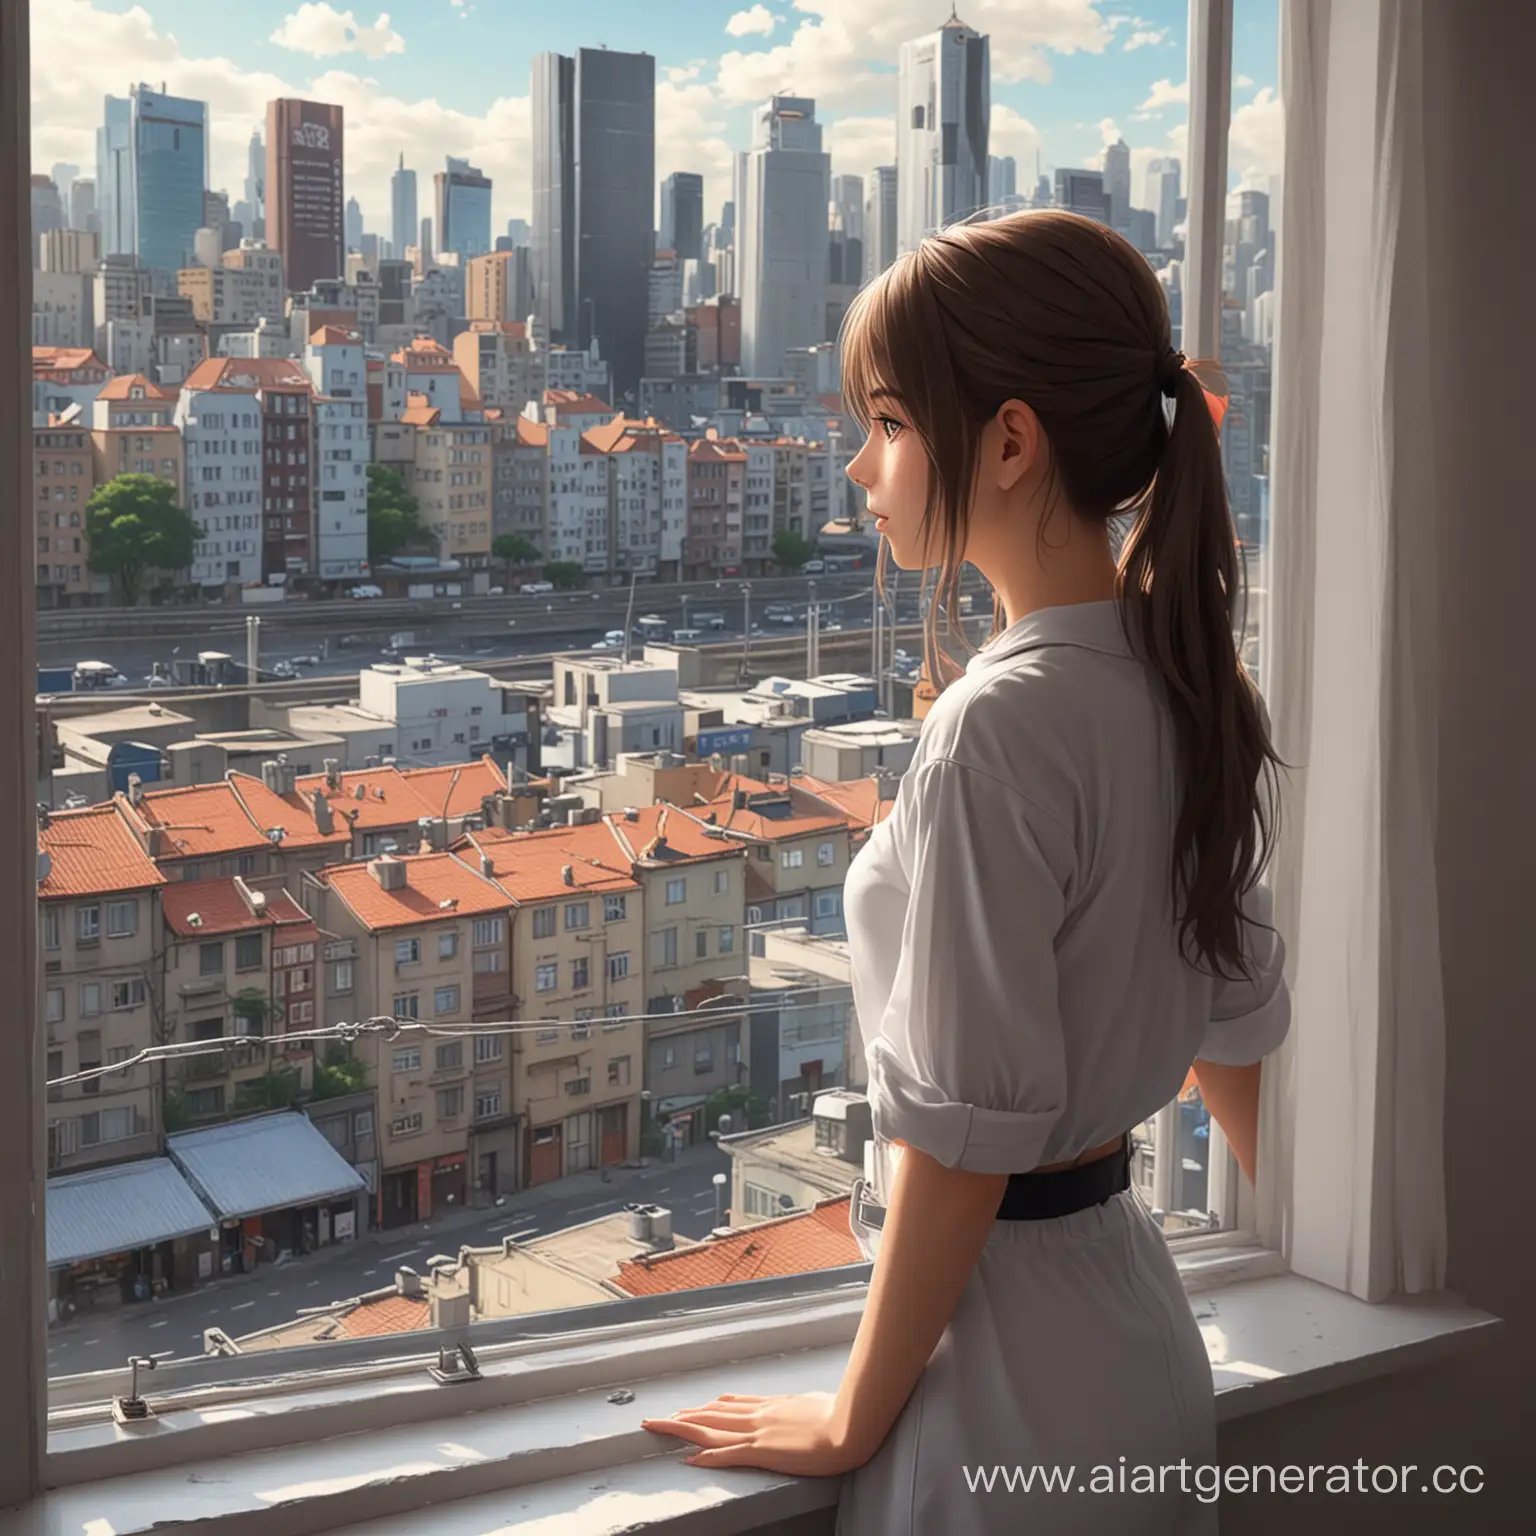 Anime-Girl-Gazing-at-Photorealistic-Cityscape-Through-Window